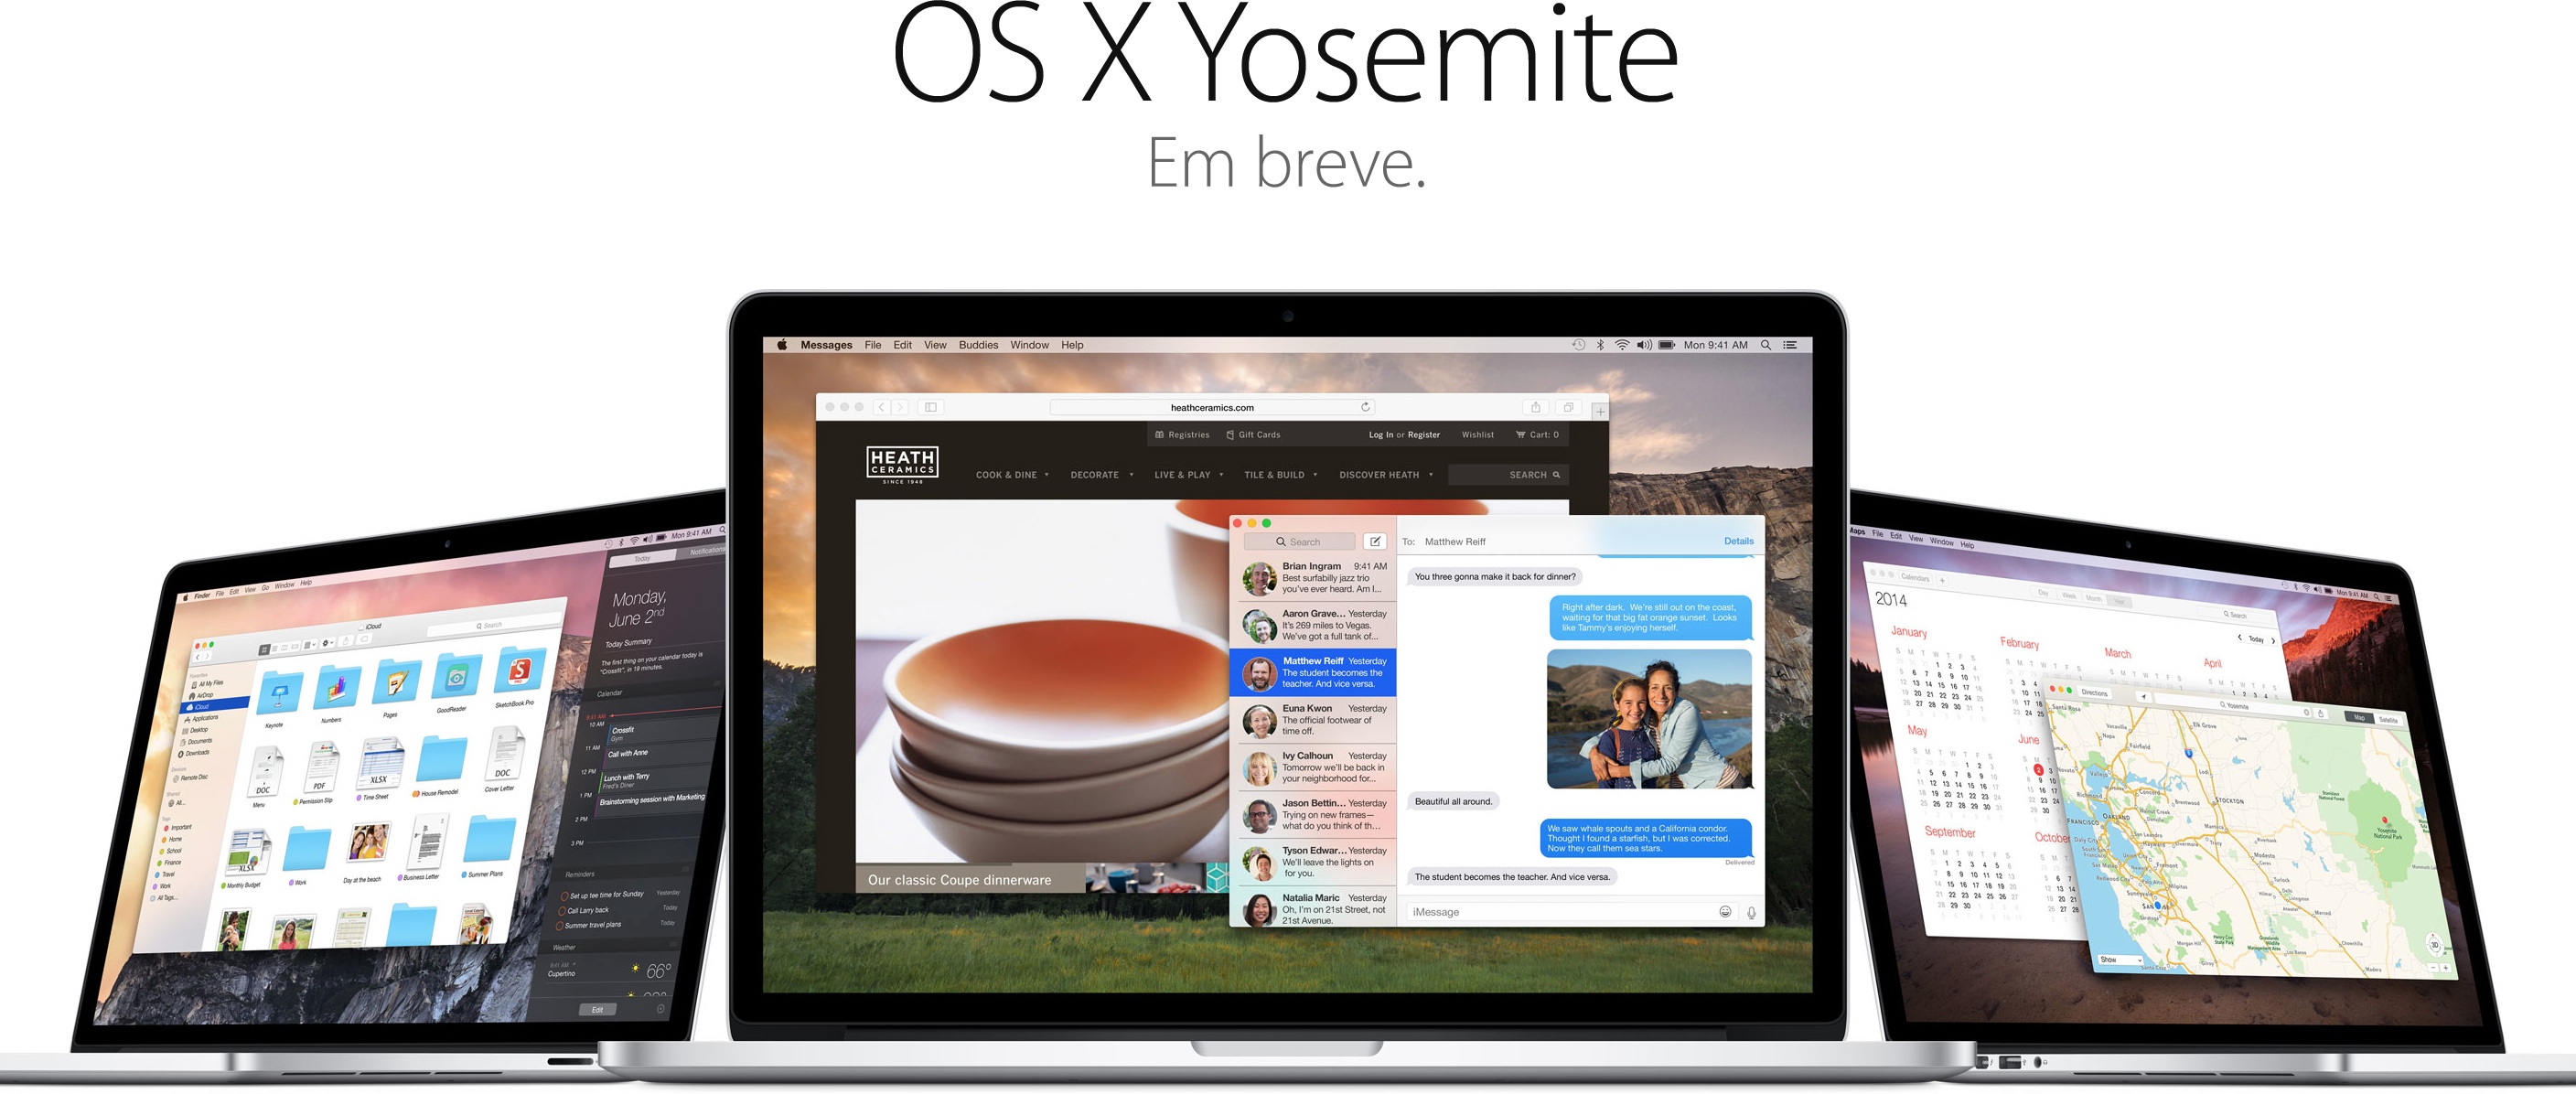 OS X Yosemite (coming soon)